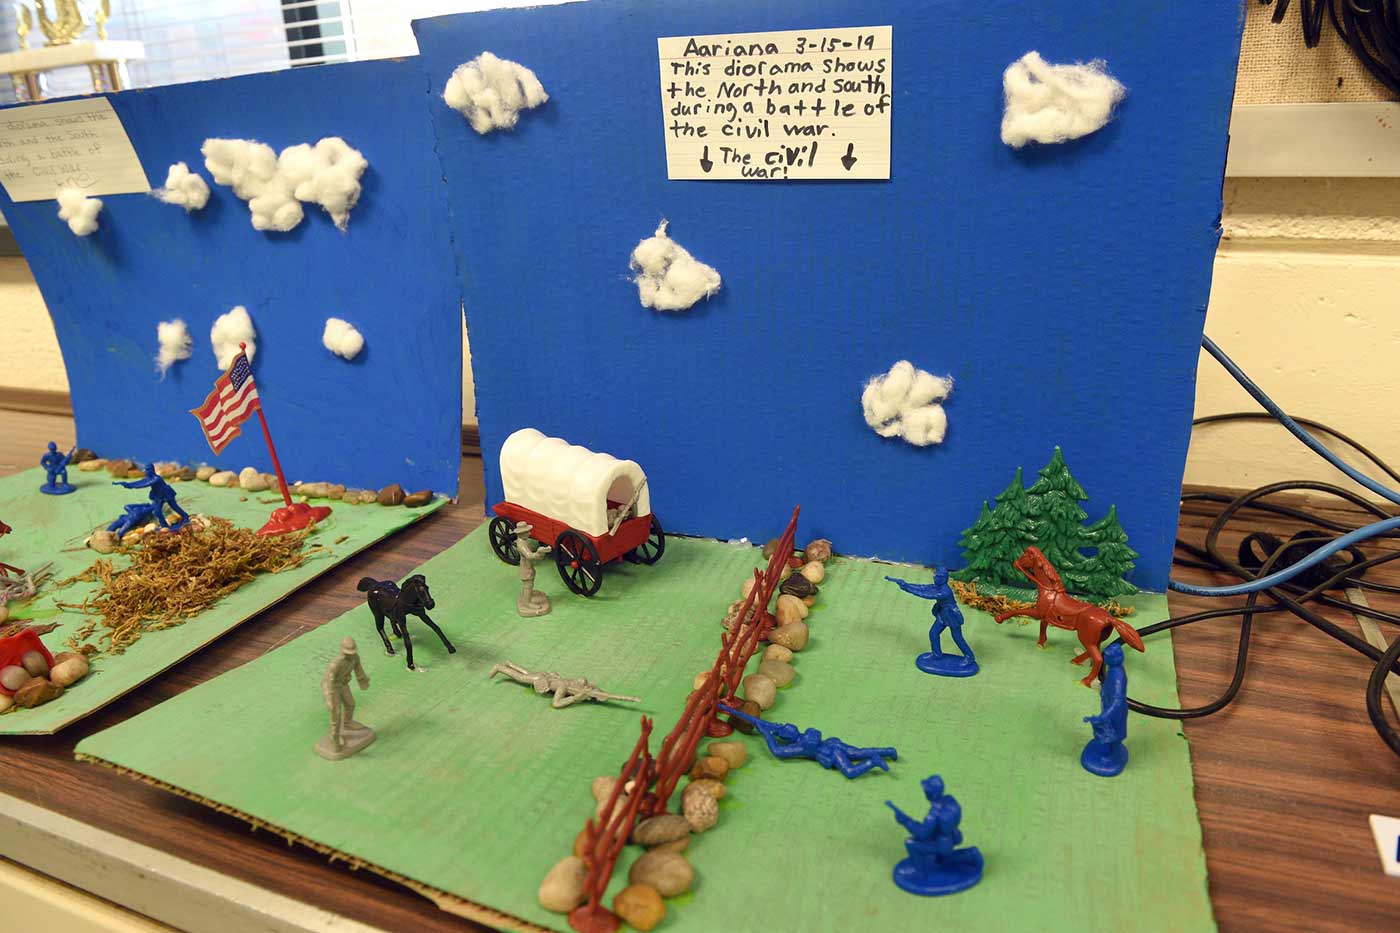 Natchaug school students diorama of the civil war displayed